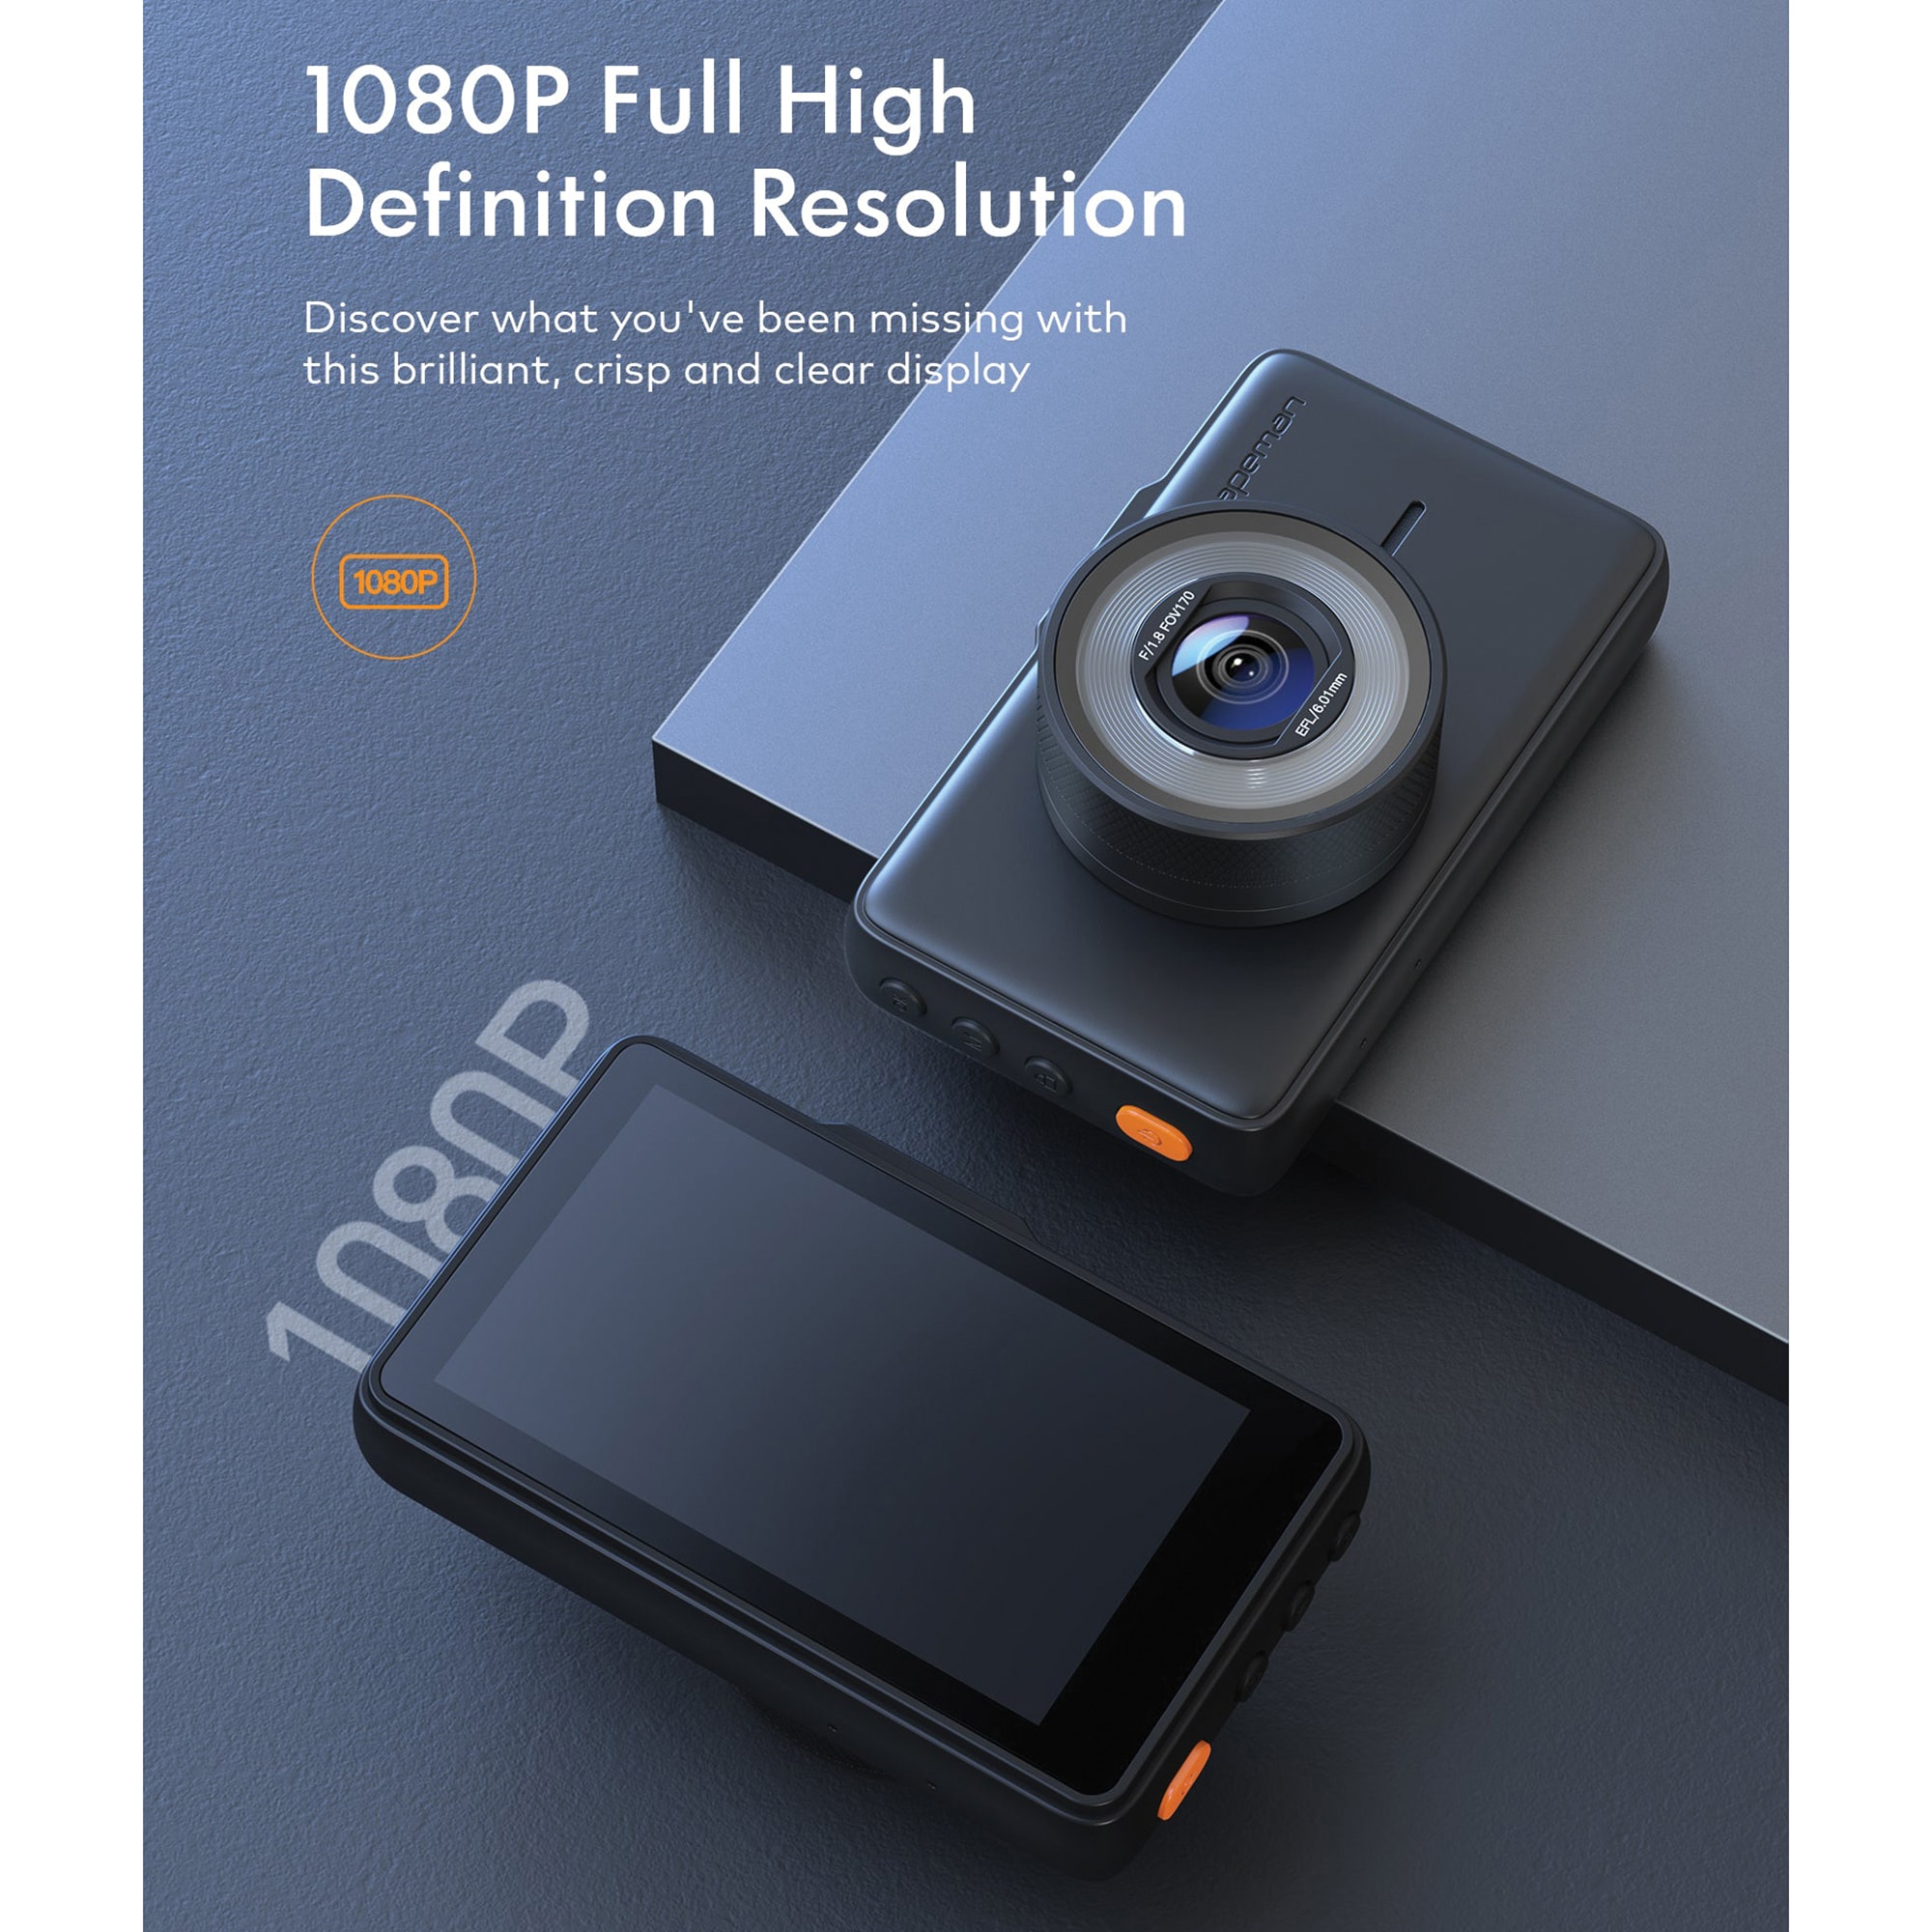 Apeman Dash Cam 1080P FHD 3 Inch LCD Screen 170°Wide Angle C450A